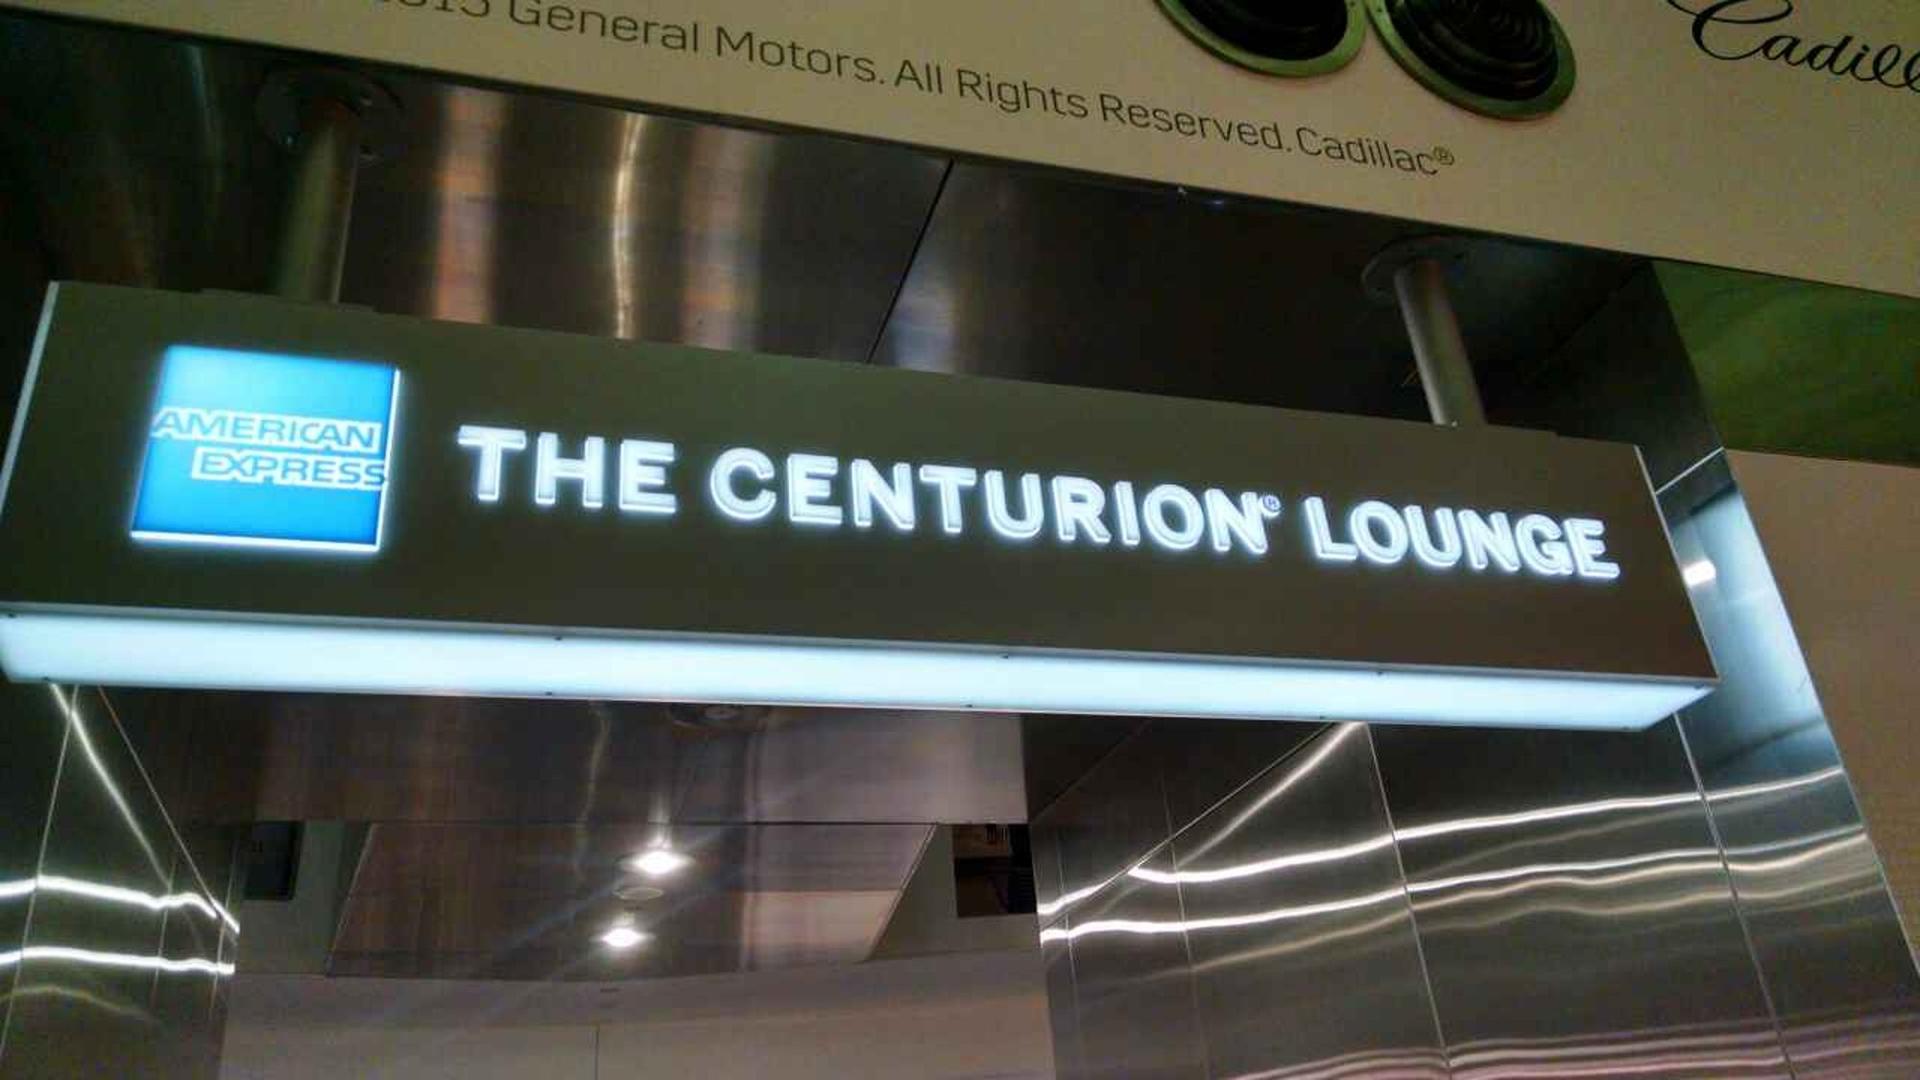 The Centurion Lounge image 69 of 76